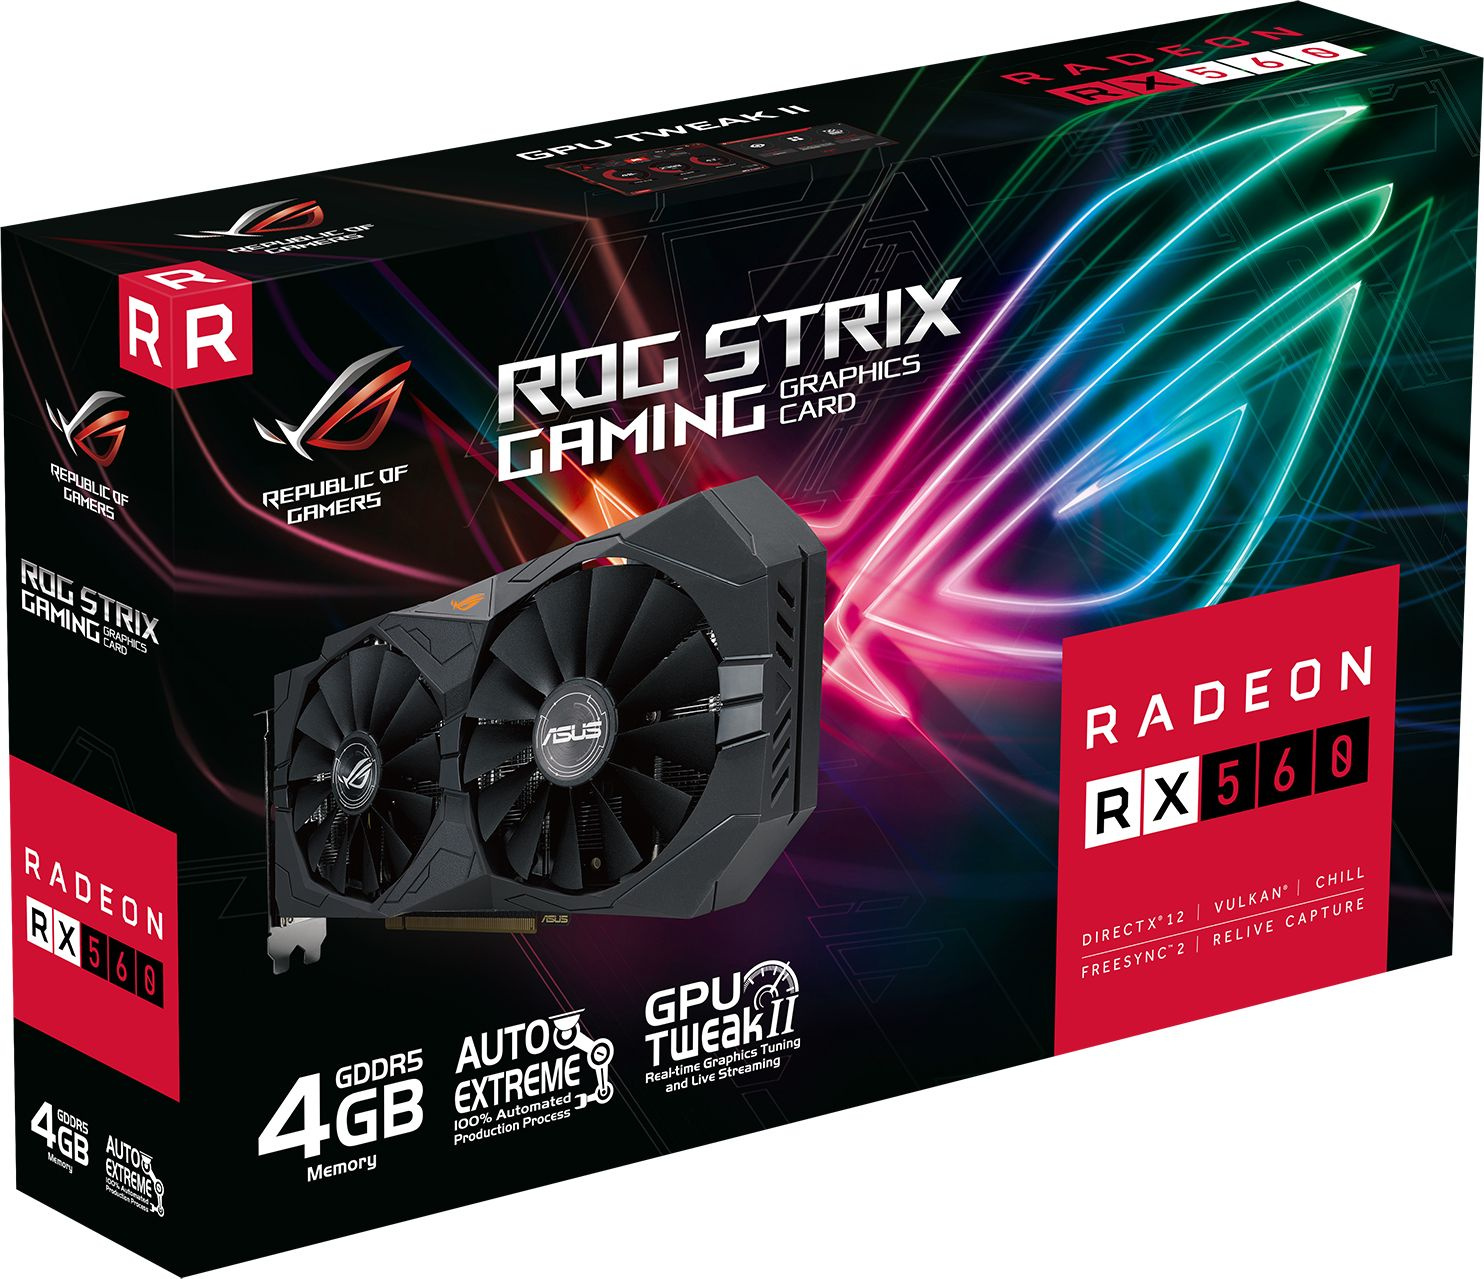 Rog strix rx560 4g gaming. RX 560 ROG Strix 4gb. RX 560 4gb ASUS Strix. ASUS AMD rx560 ROG Strix. ASUS Radeon RX 560 ROG Strix Gaming v2 4g.